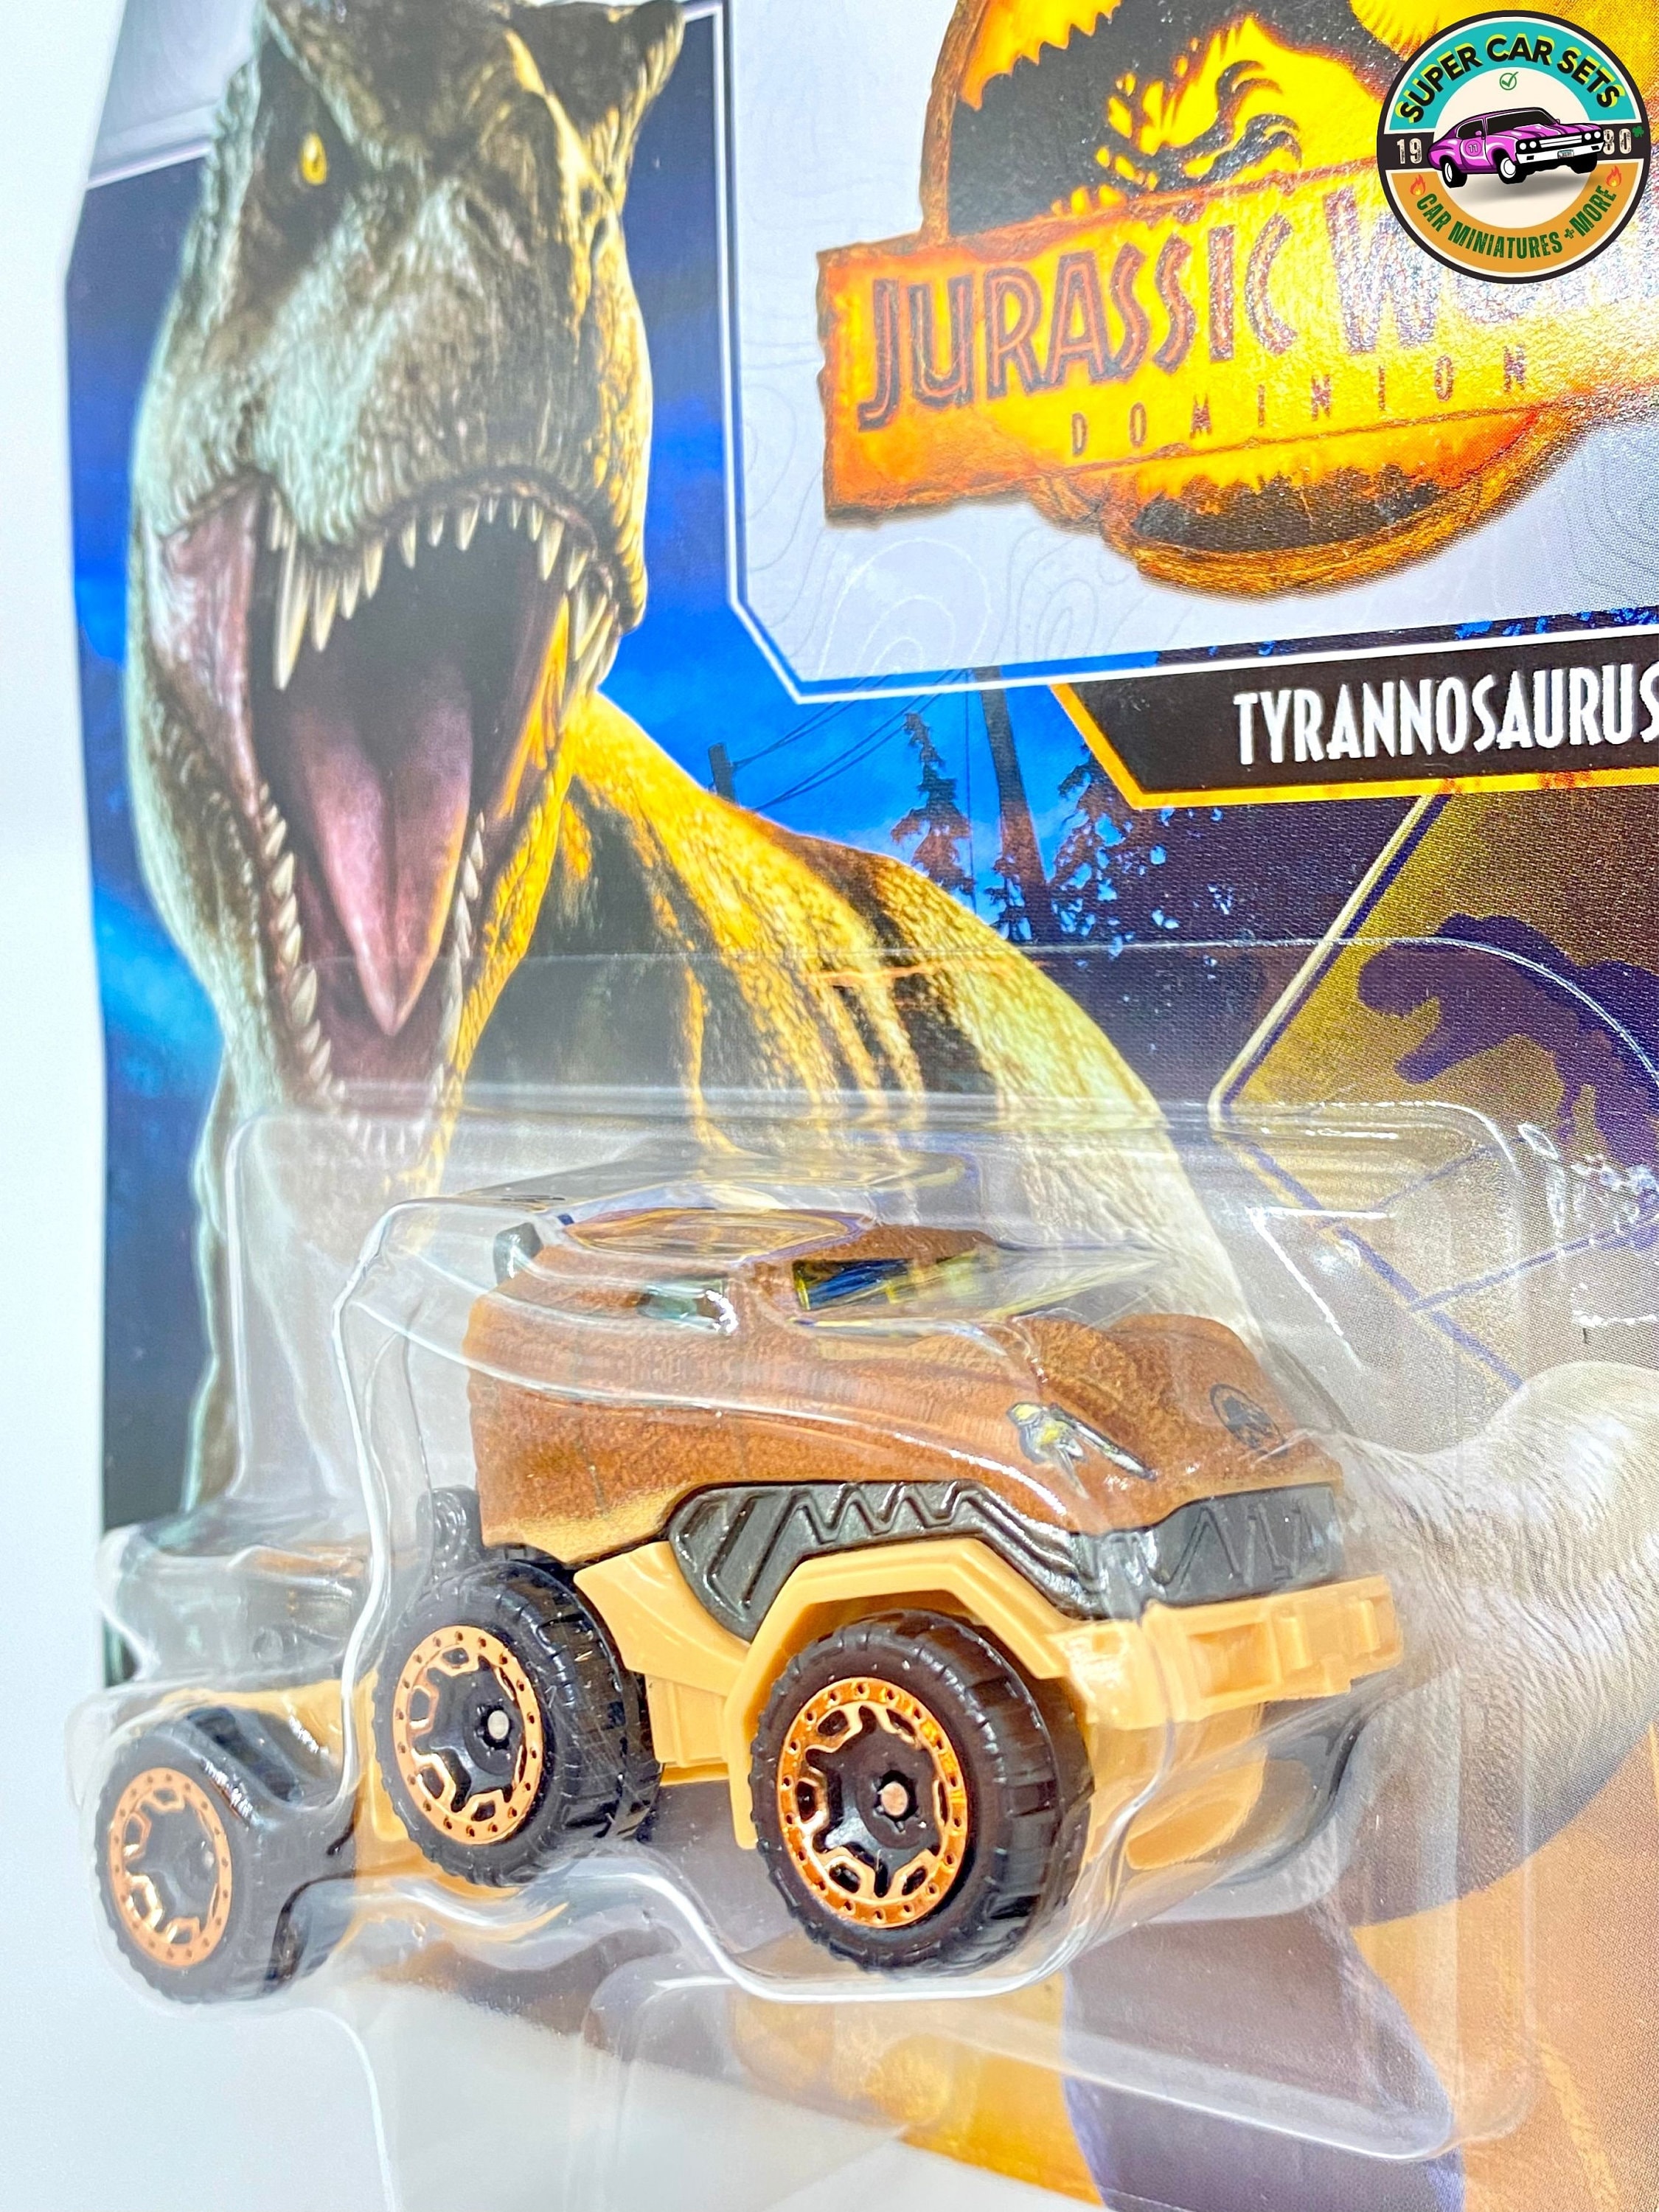 Tyrannosaurus Rex GIGANTESCO Jurassic World com Hot Wheels 